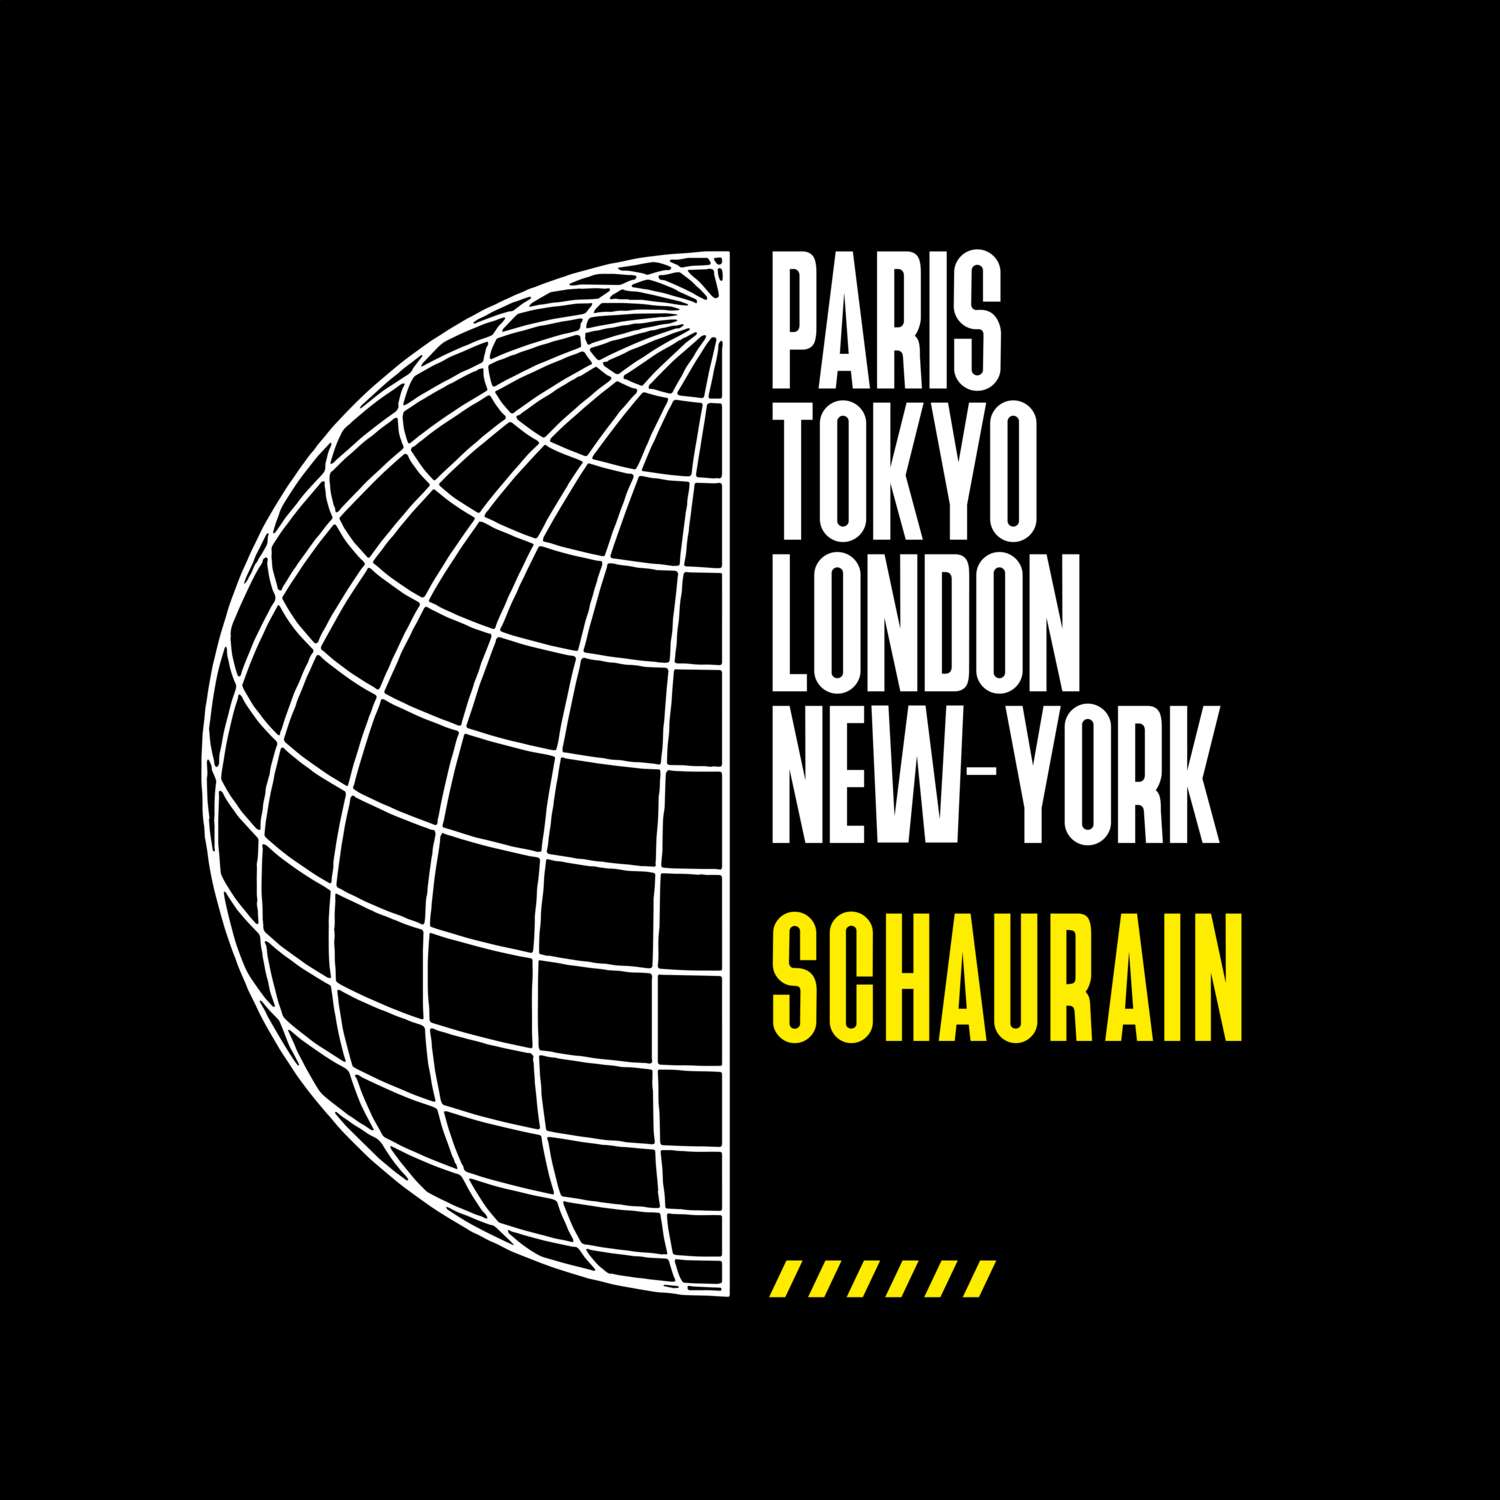 Schaurain T-Shirt »Paris Tokyo London«